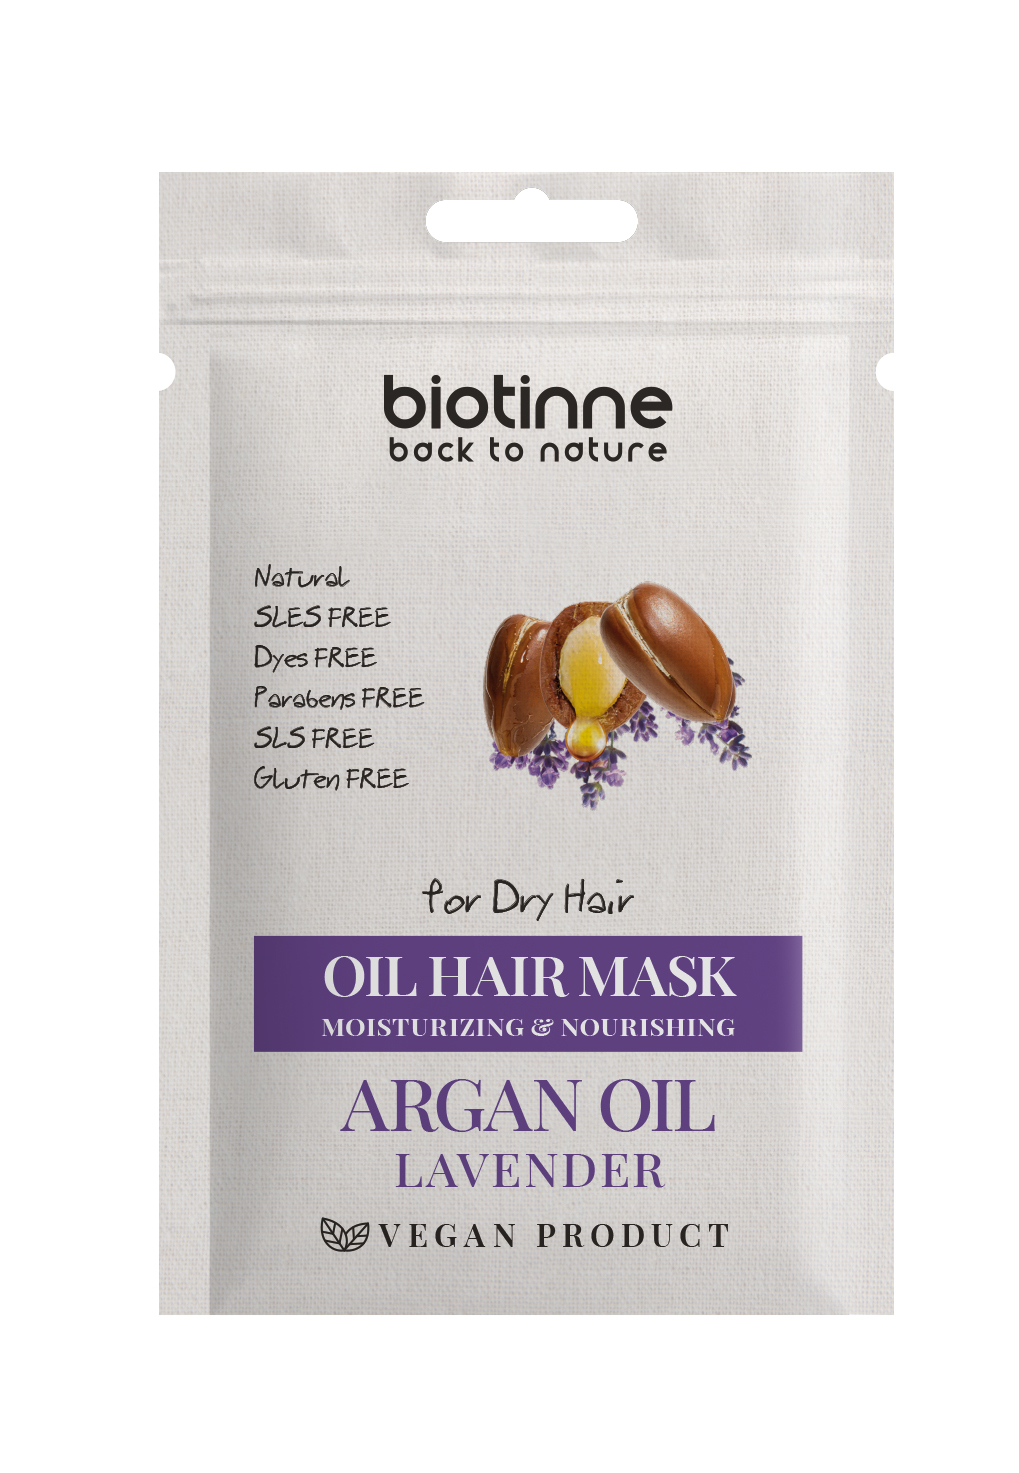 Argan Oil & Lavender - Oil hair treatment for dry hair - 20 ml